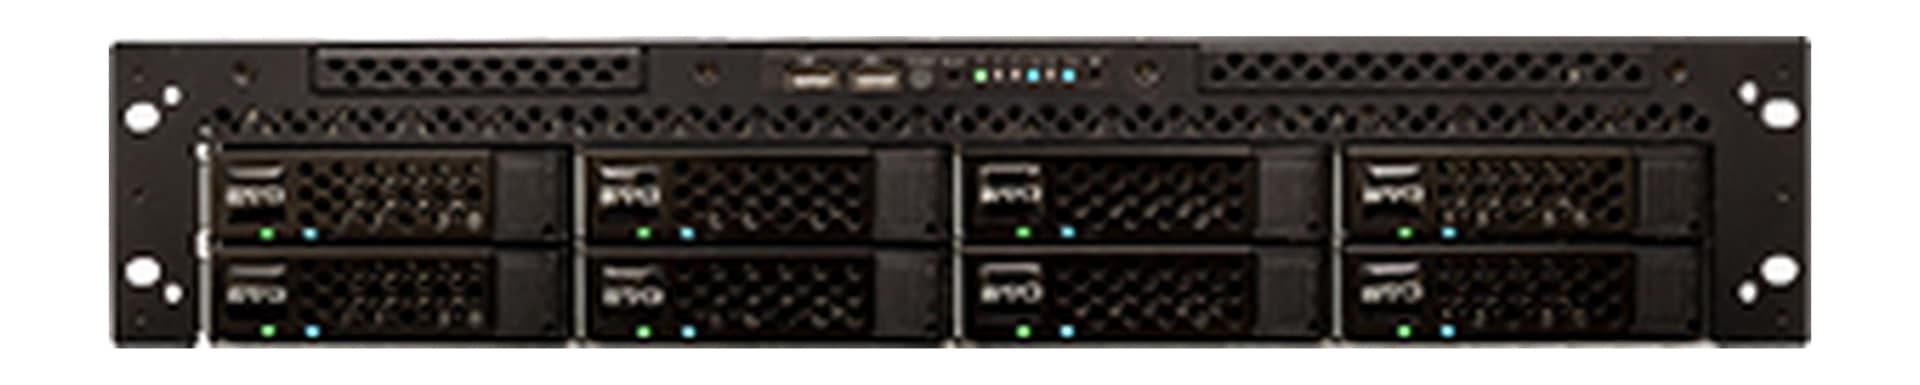 SNS EVO 2U 8 Bay Shared Storage Server with 30.4TB Raw Capacity Solid State